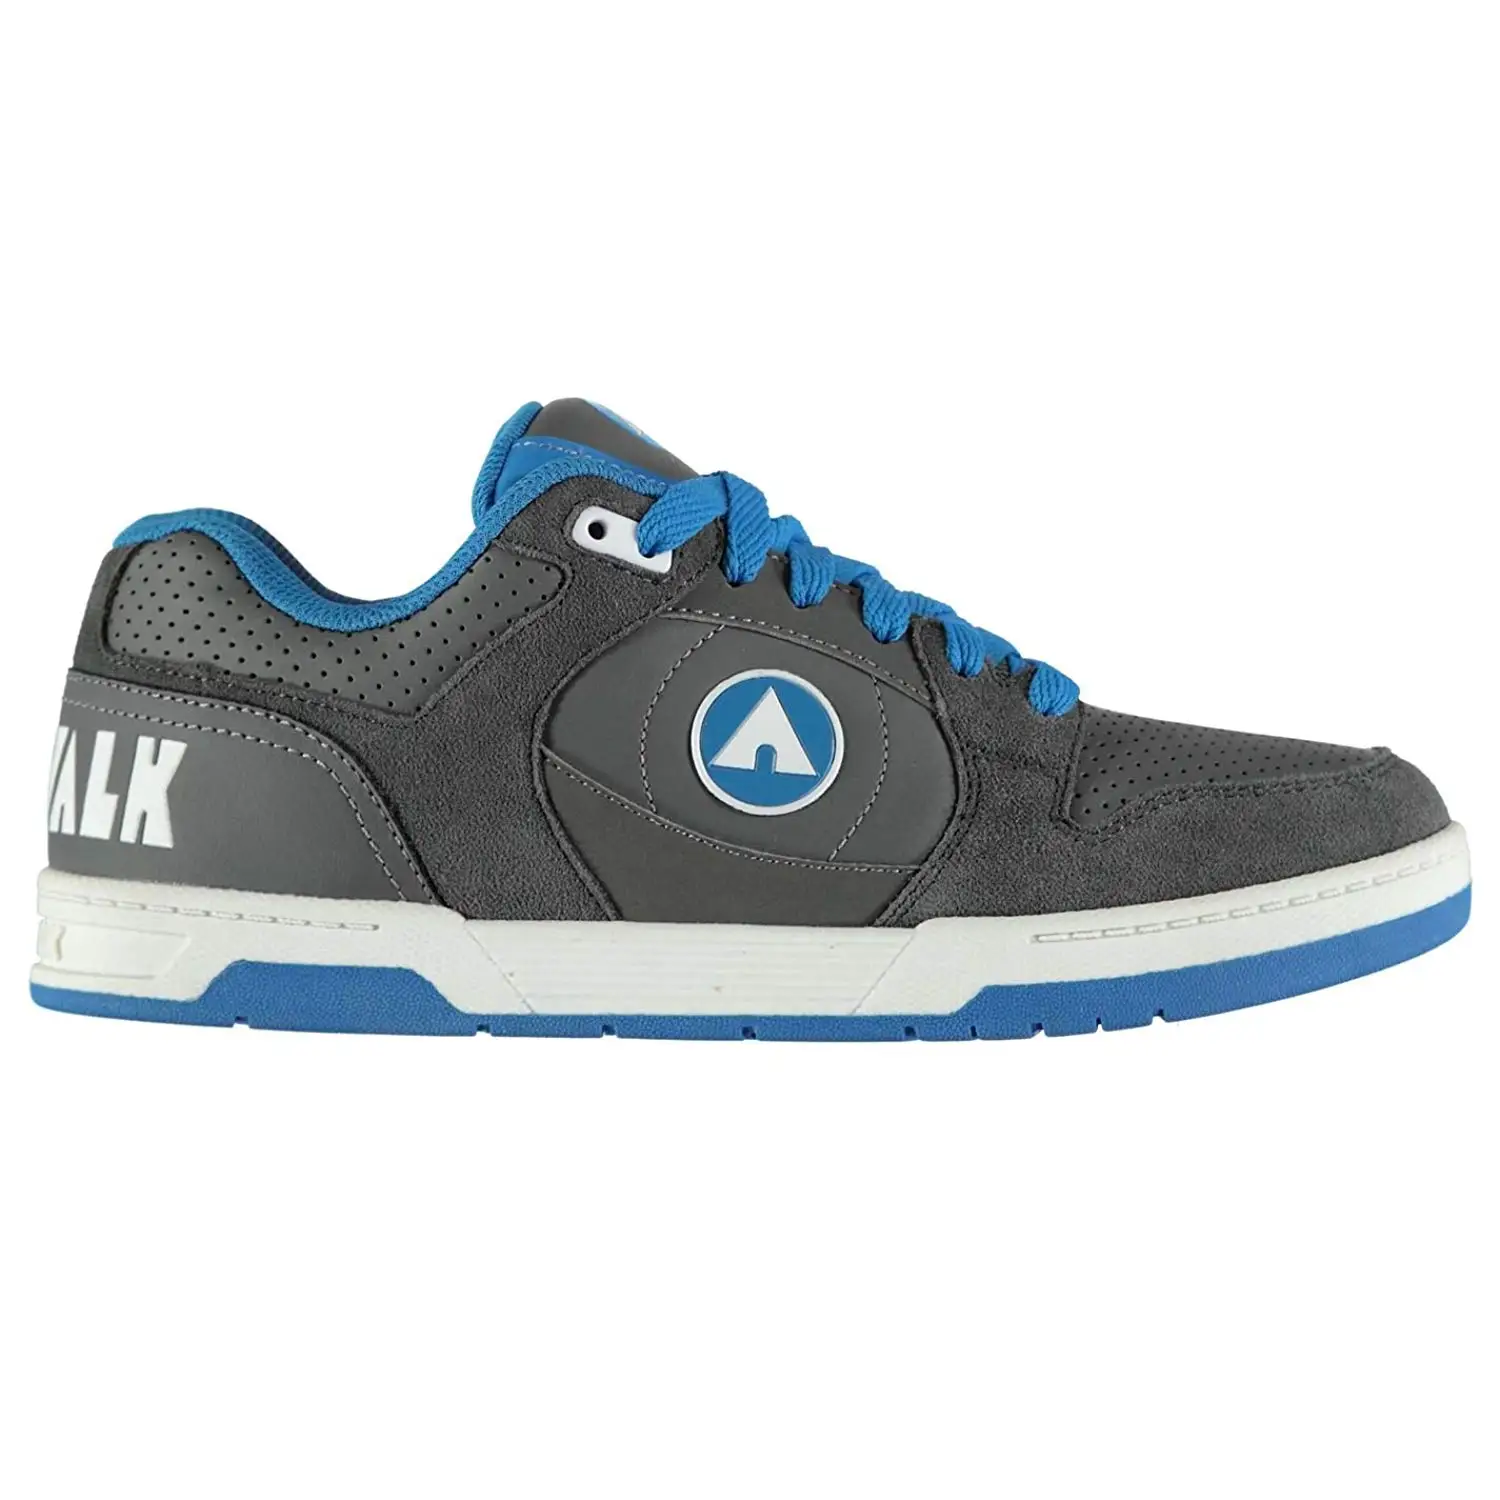 airwalk skate shoes 9s